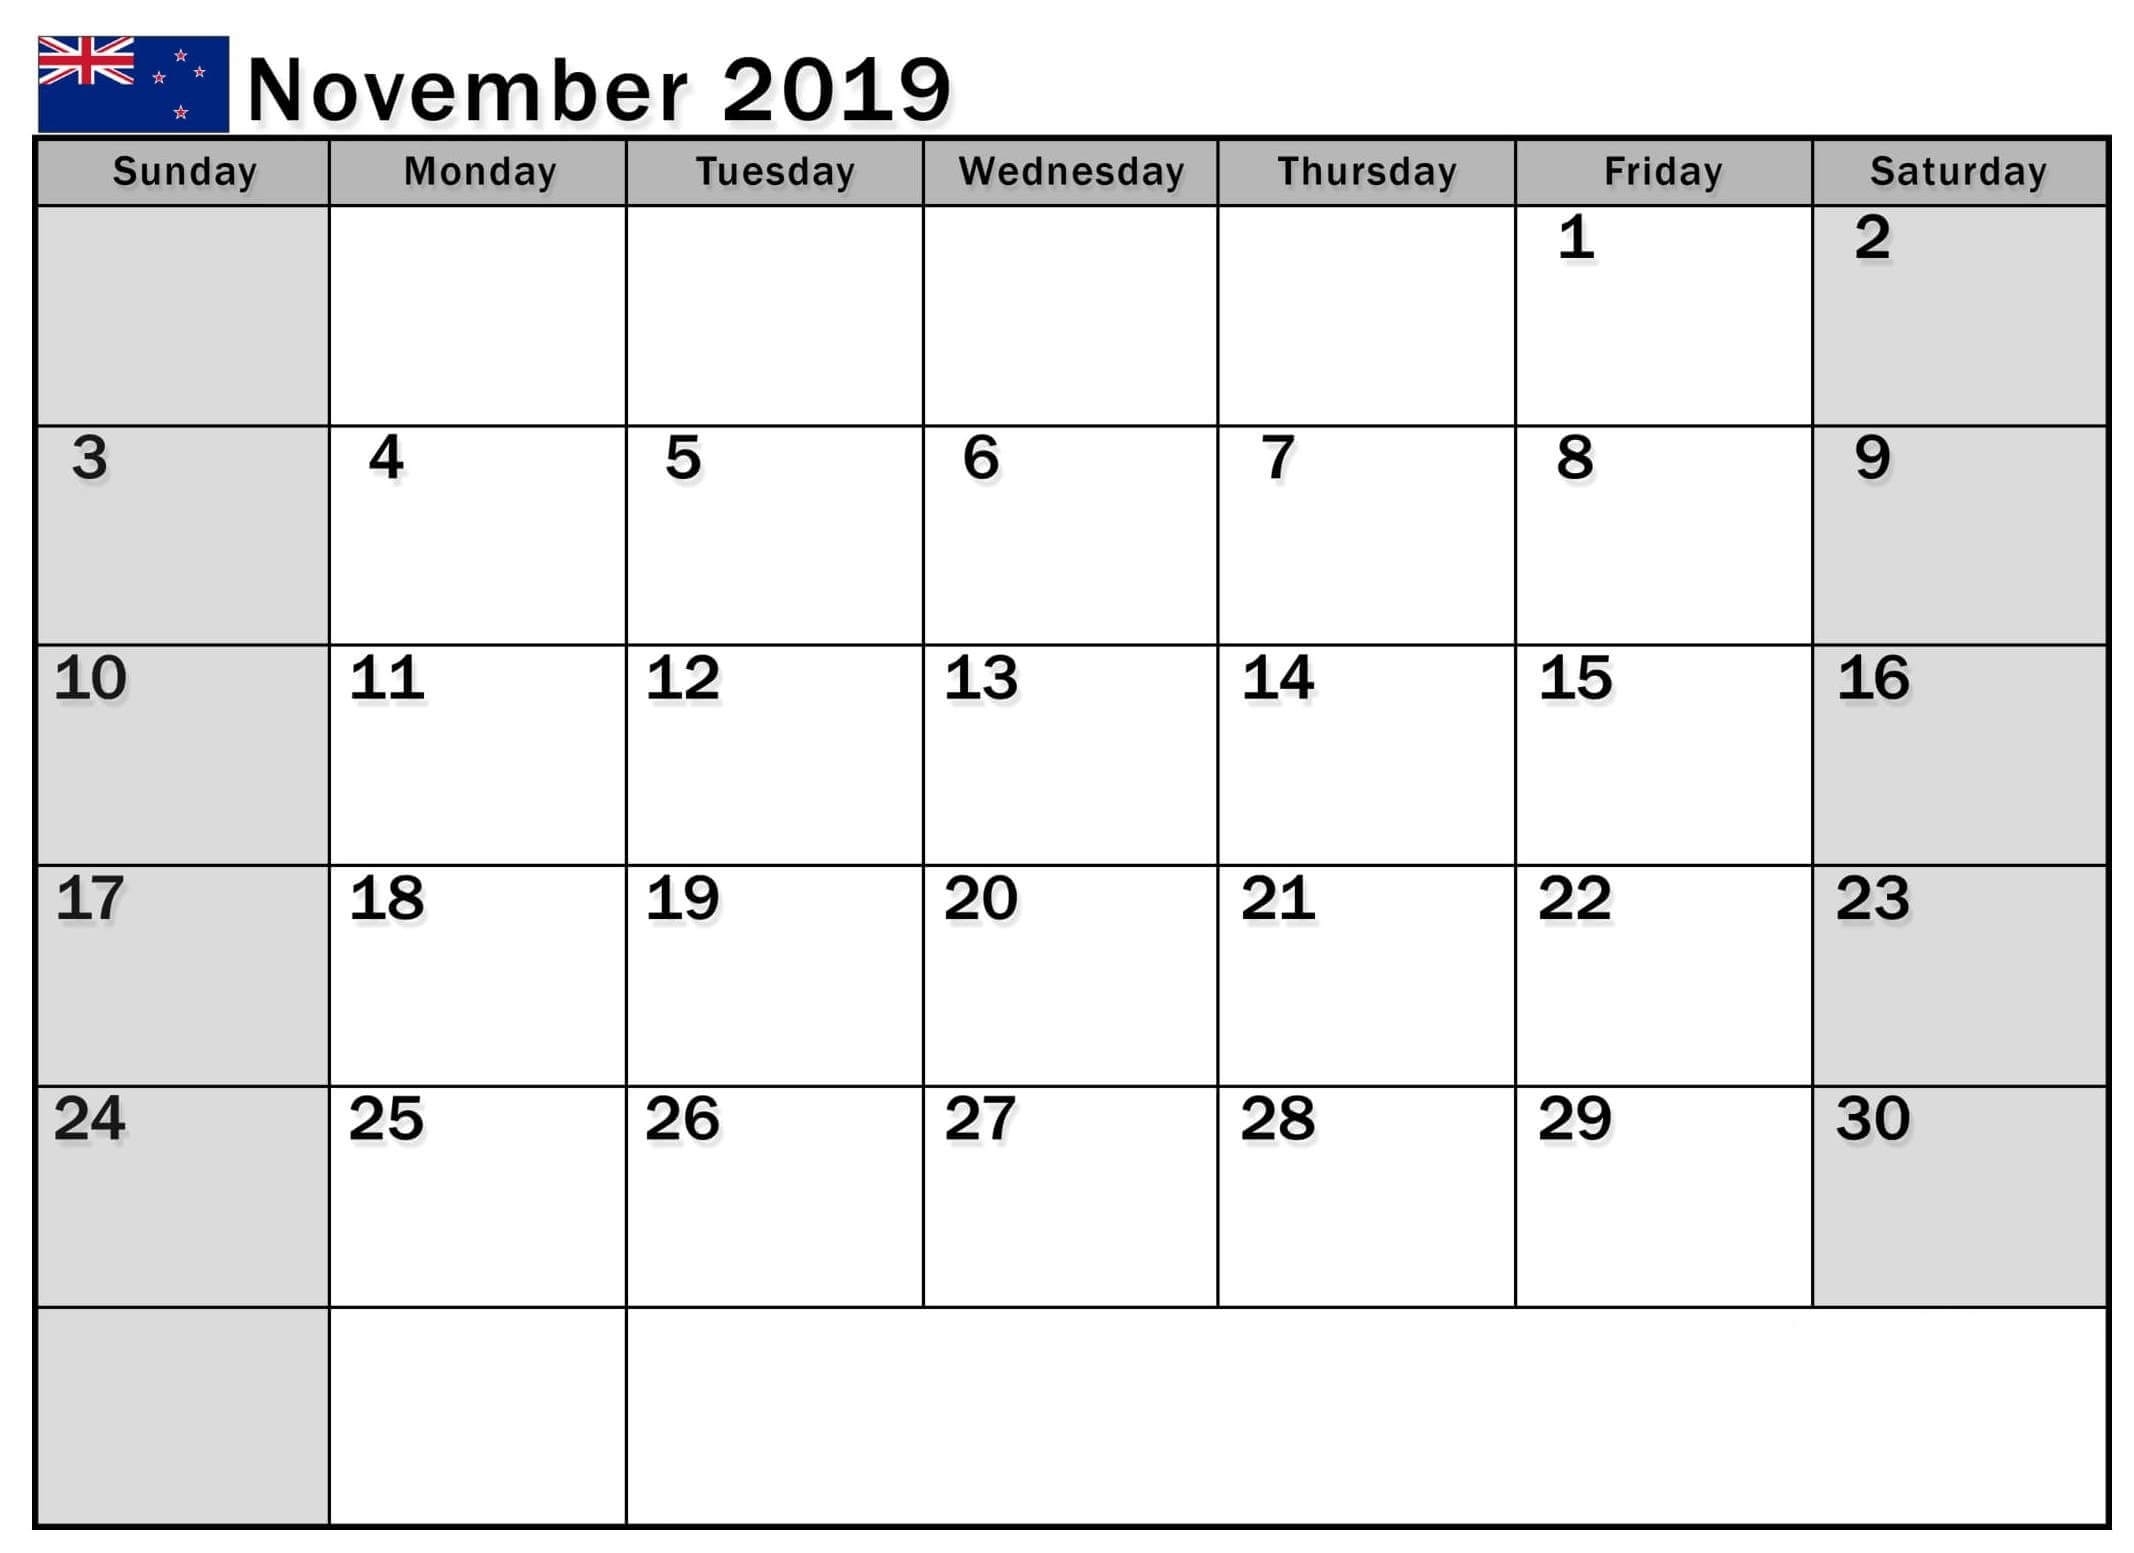 November 2019 Calendar Nz With National Holidays - 2019